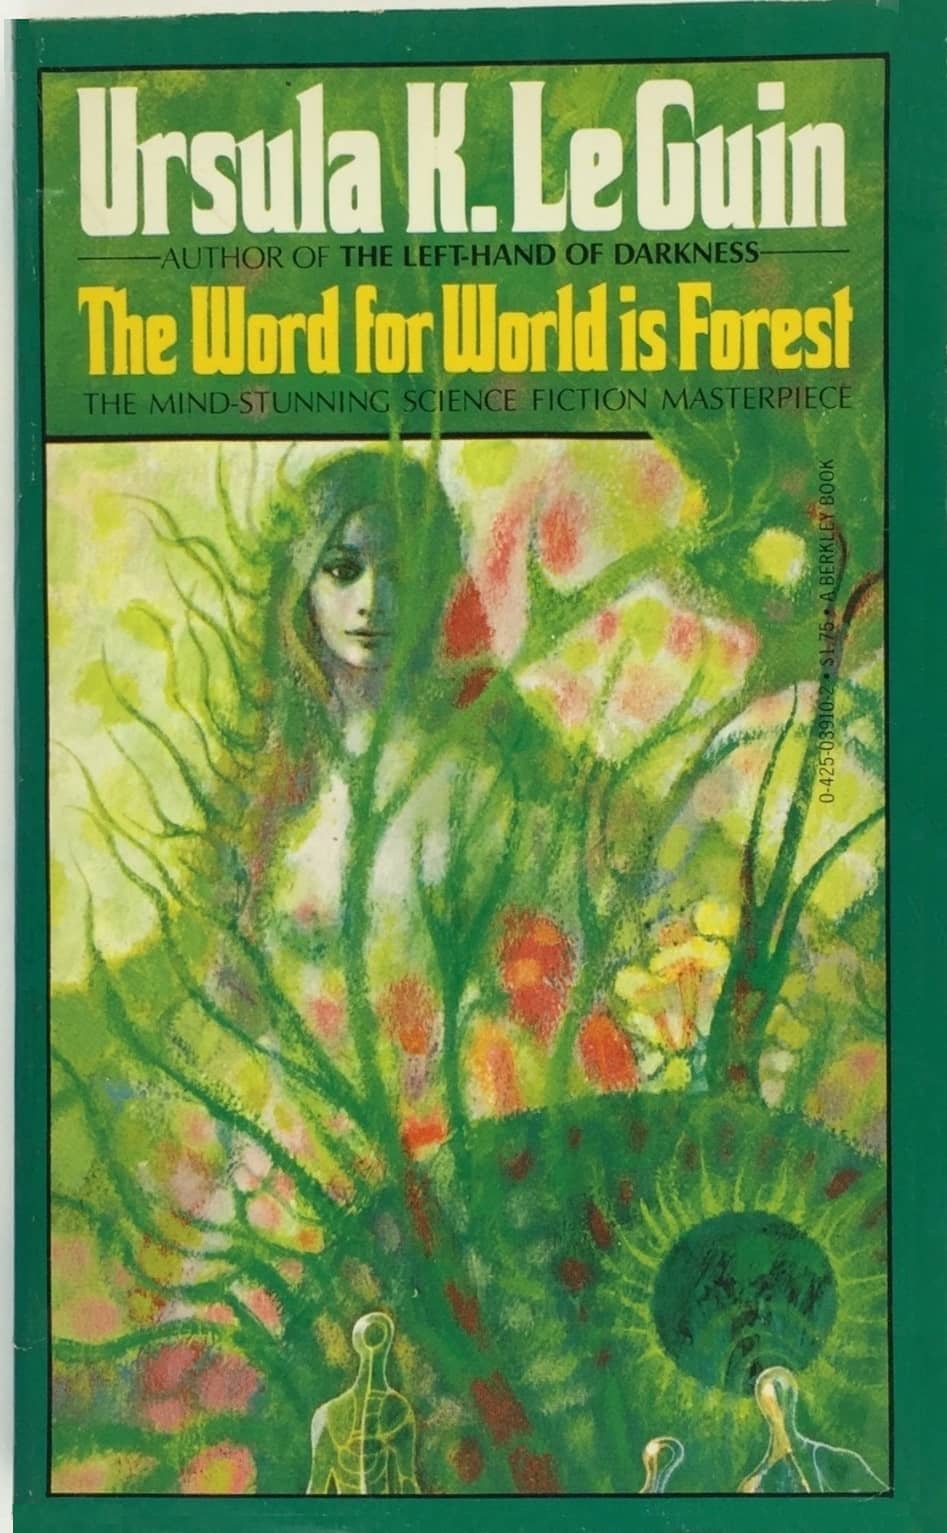 The Golden Age of Science Fiction The 1973 Hugo Award for Best Novella